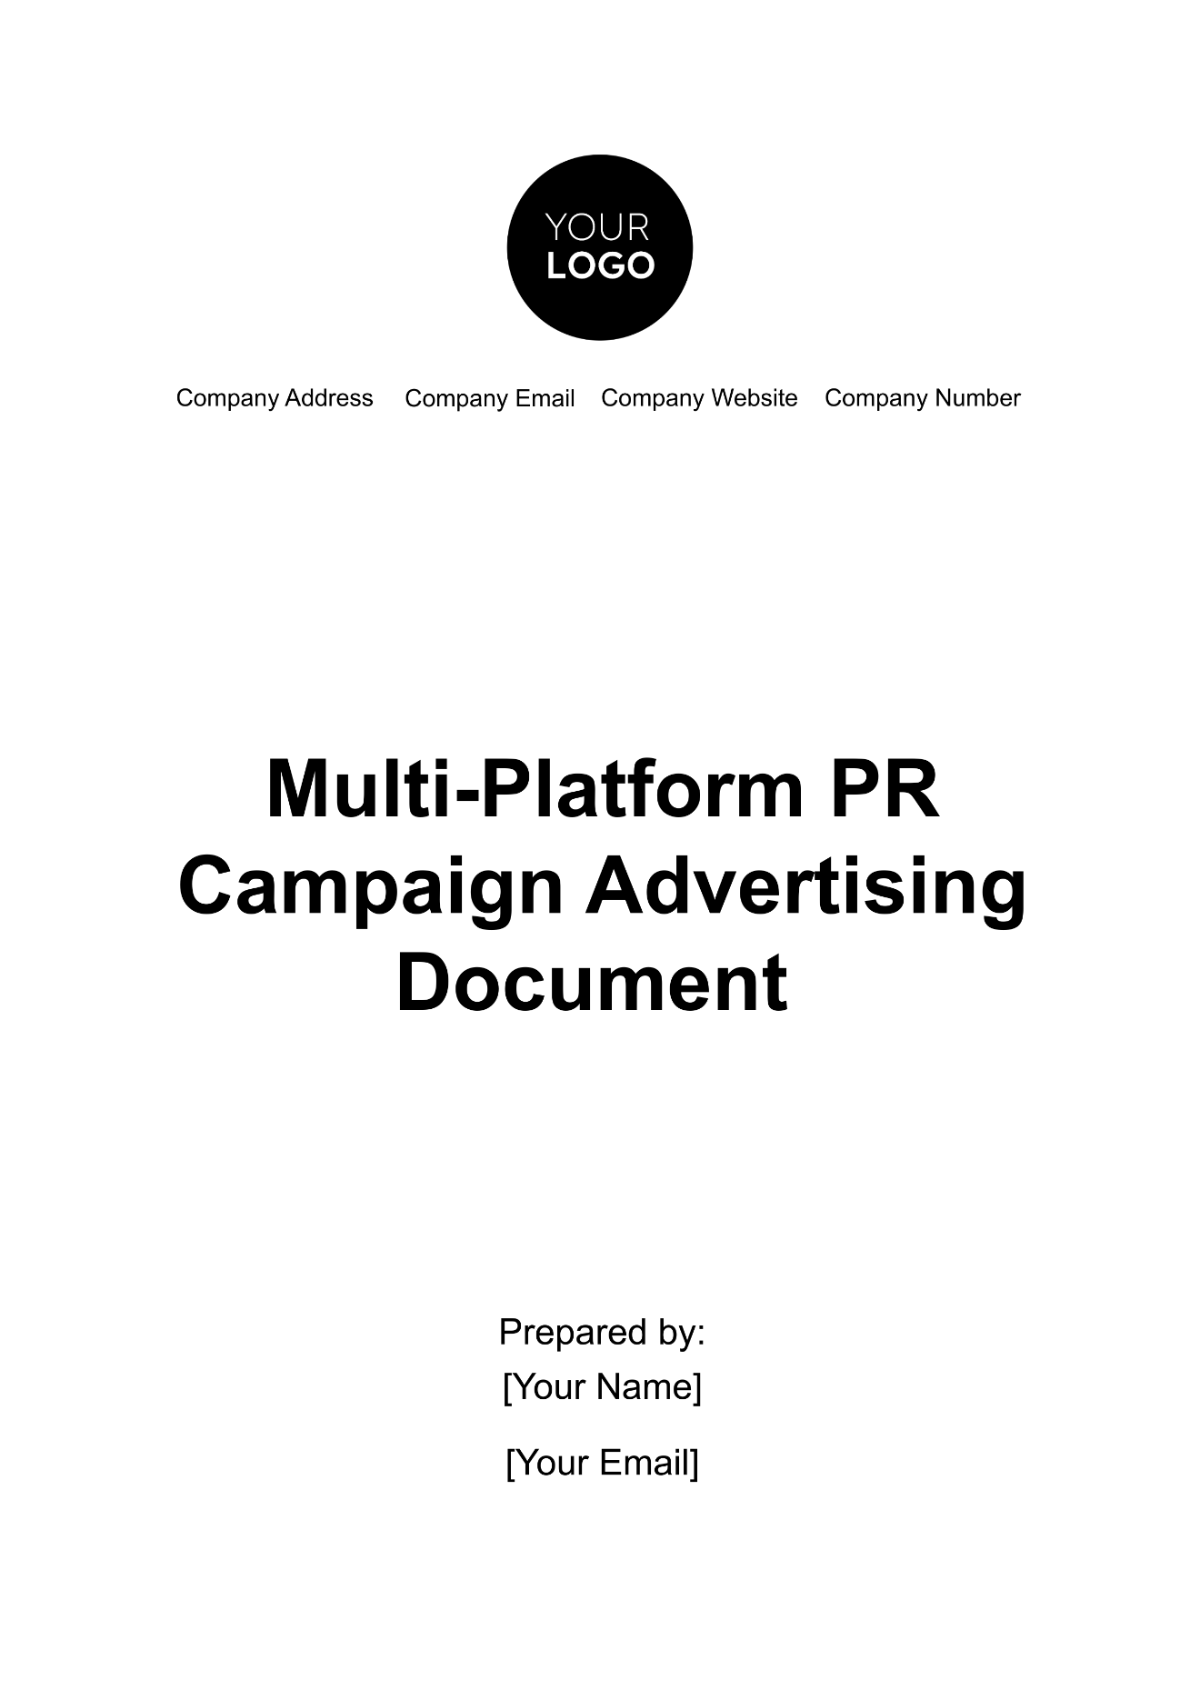 Free Multi-Platform PR Campaign Advertising Document Template